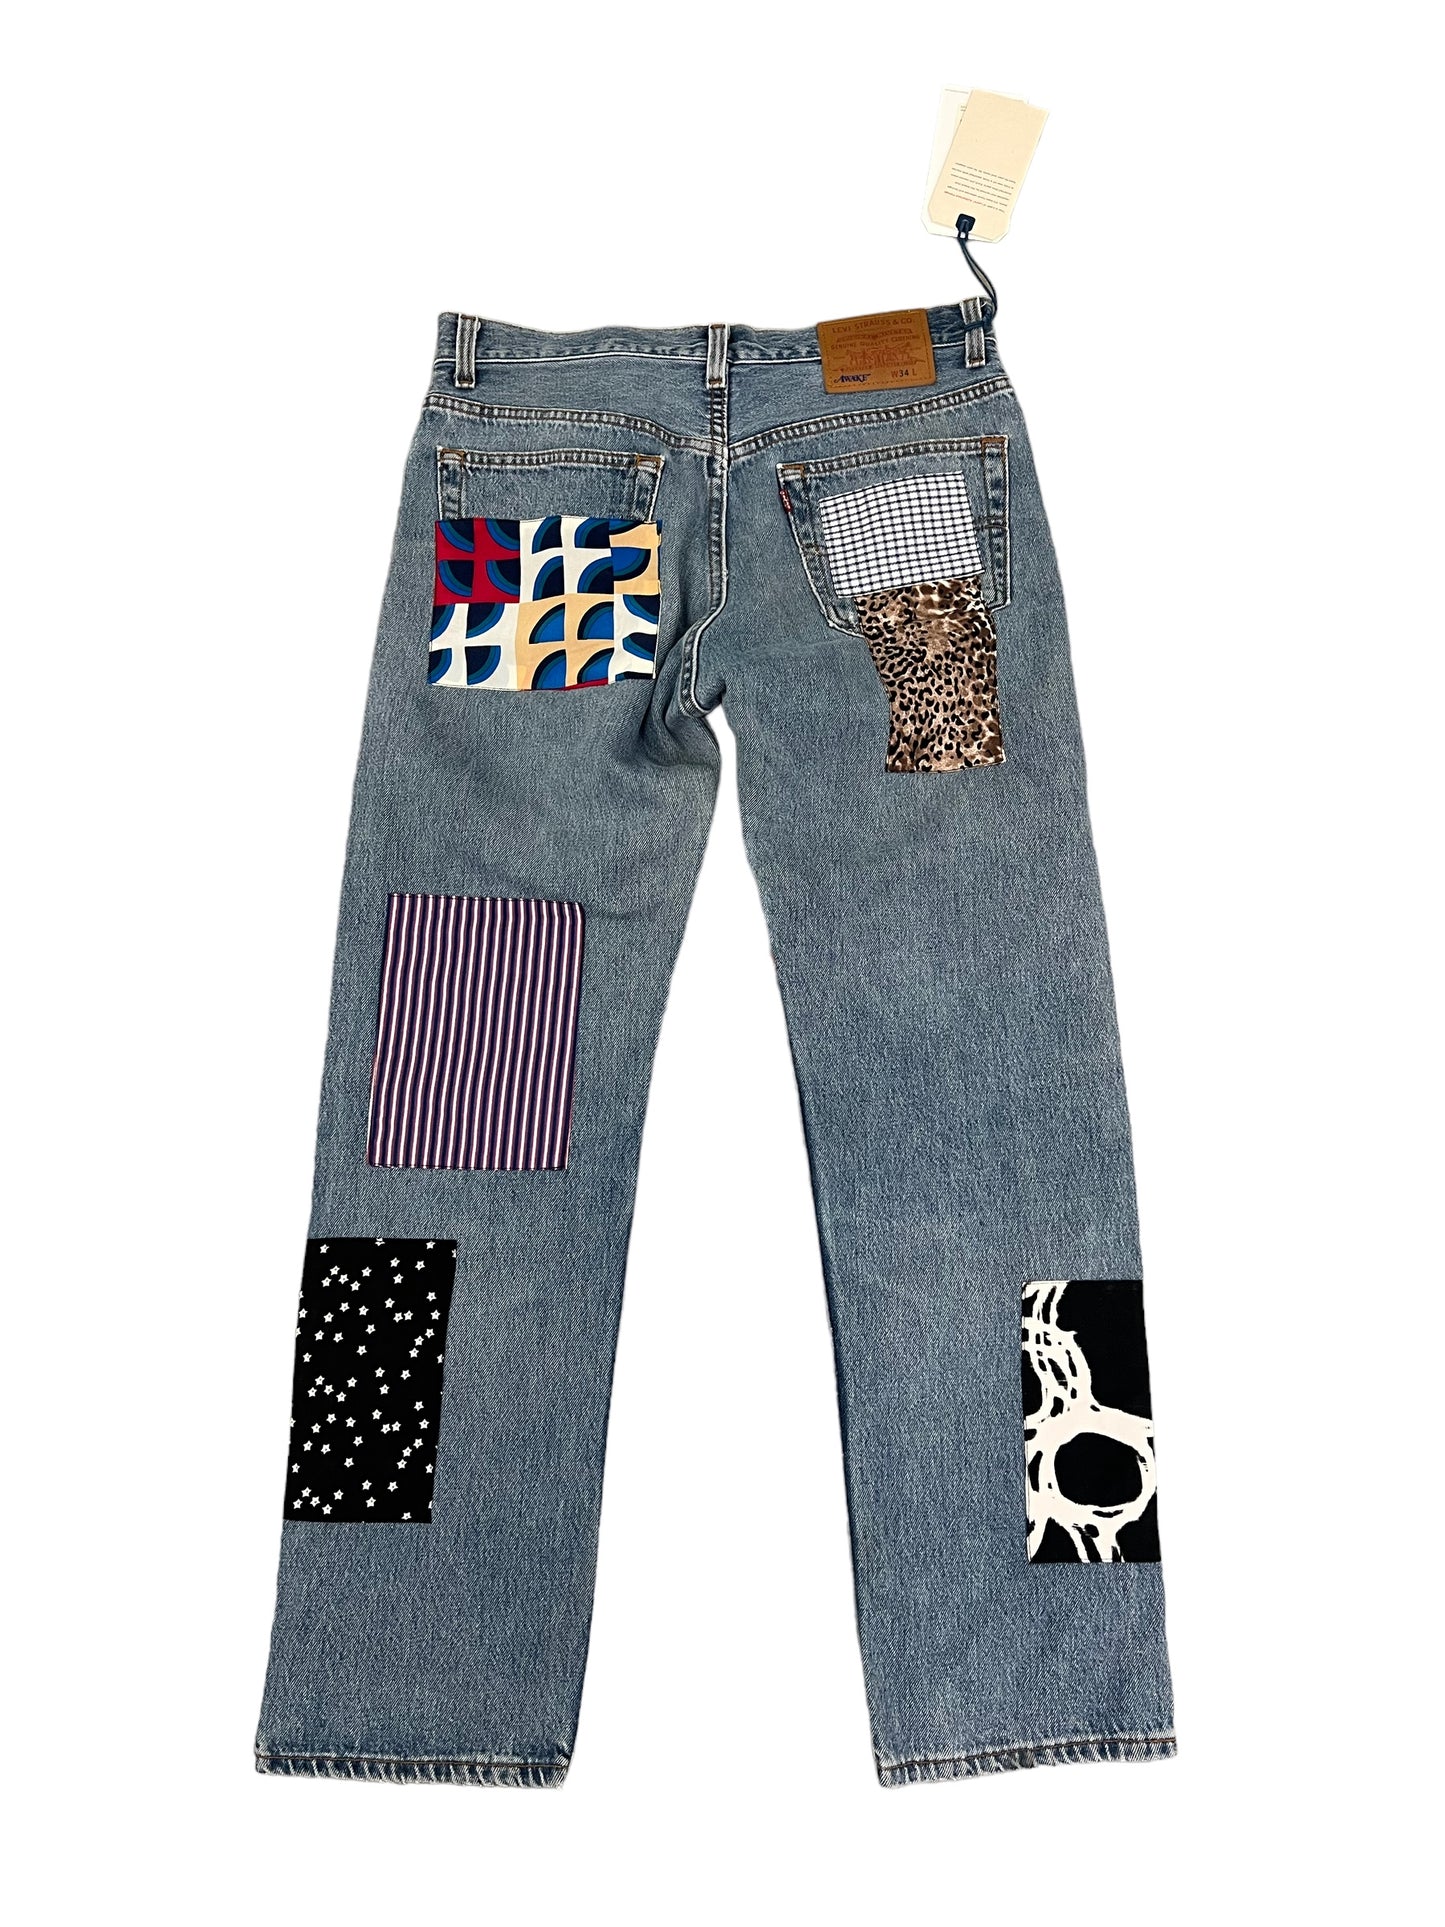 Levi’s/Awake patchwork Jeans